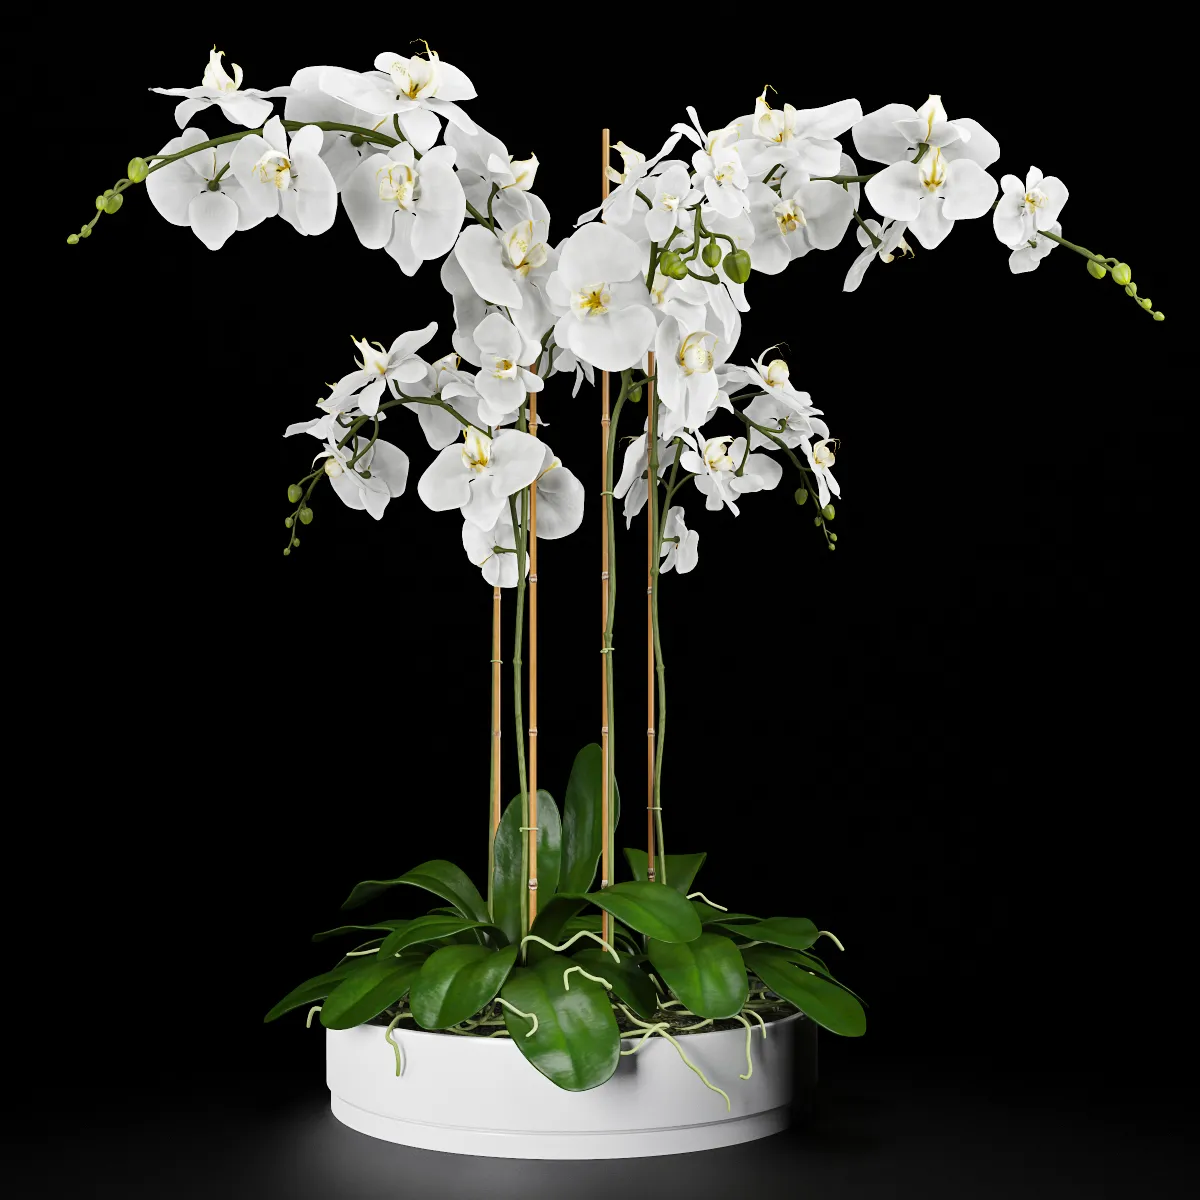 FLOWER – PLANT 3D MODELS – 580